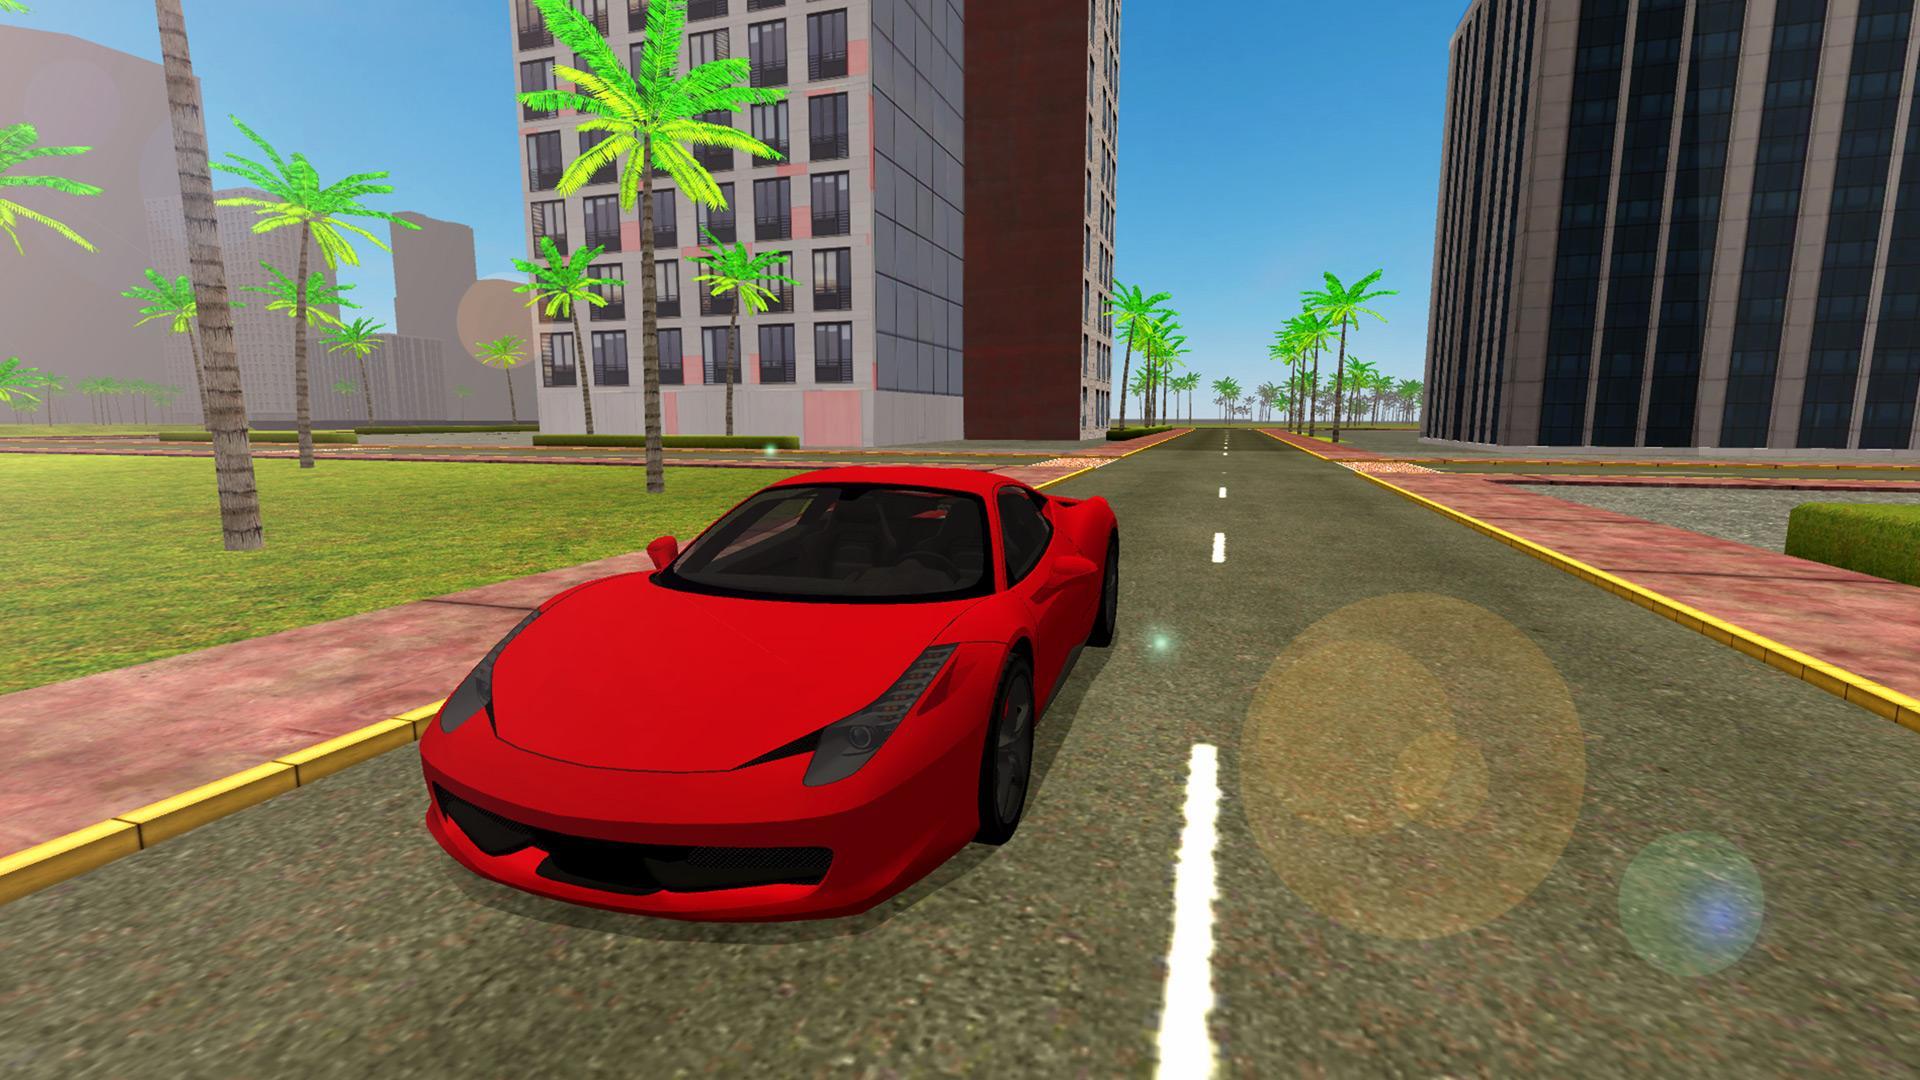 Screenshot 1 of รถเร็วสุดขีด 1.1